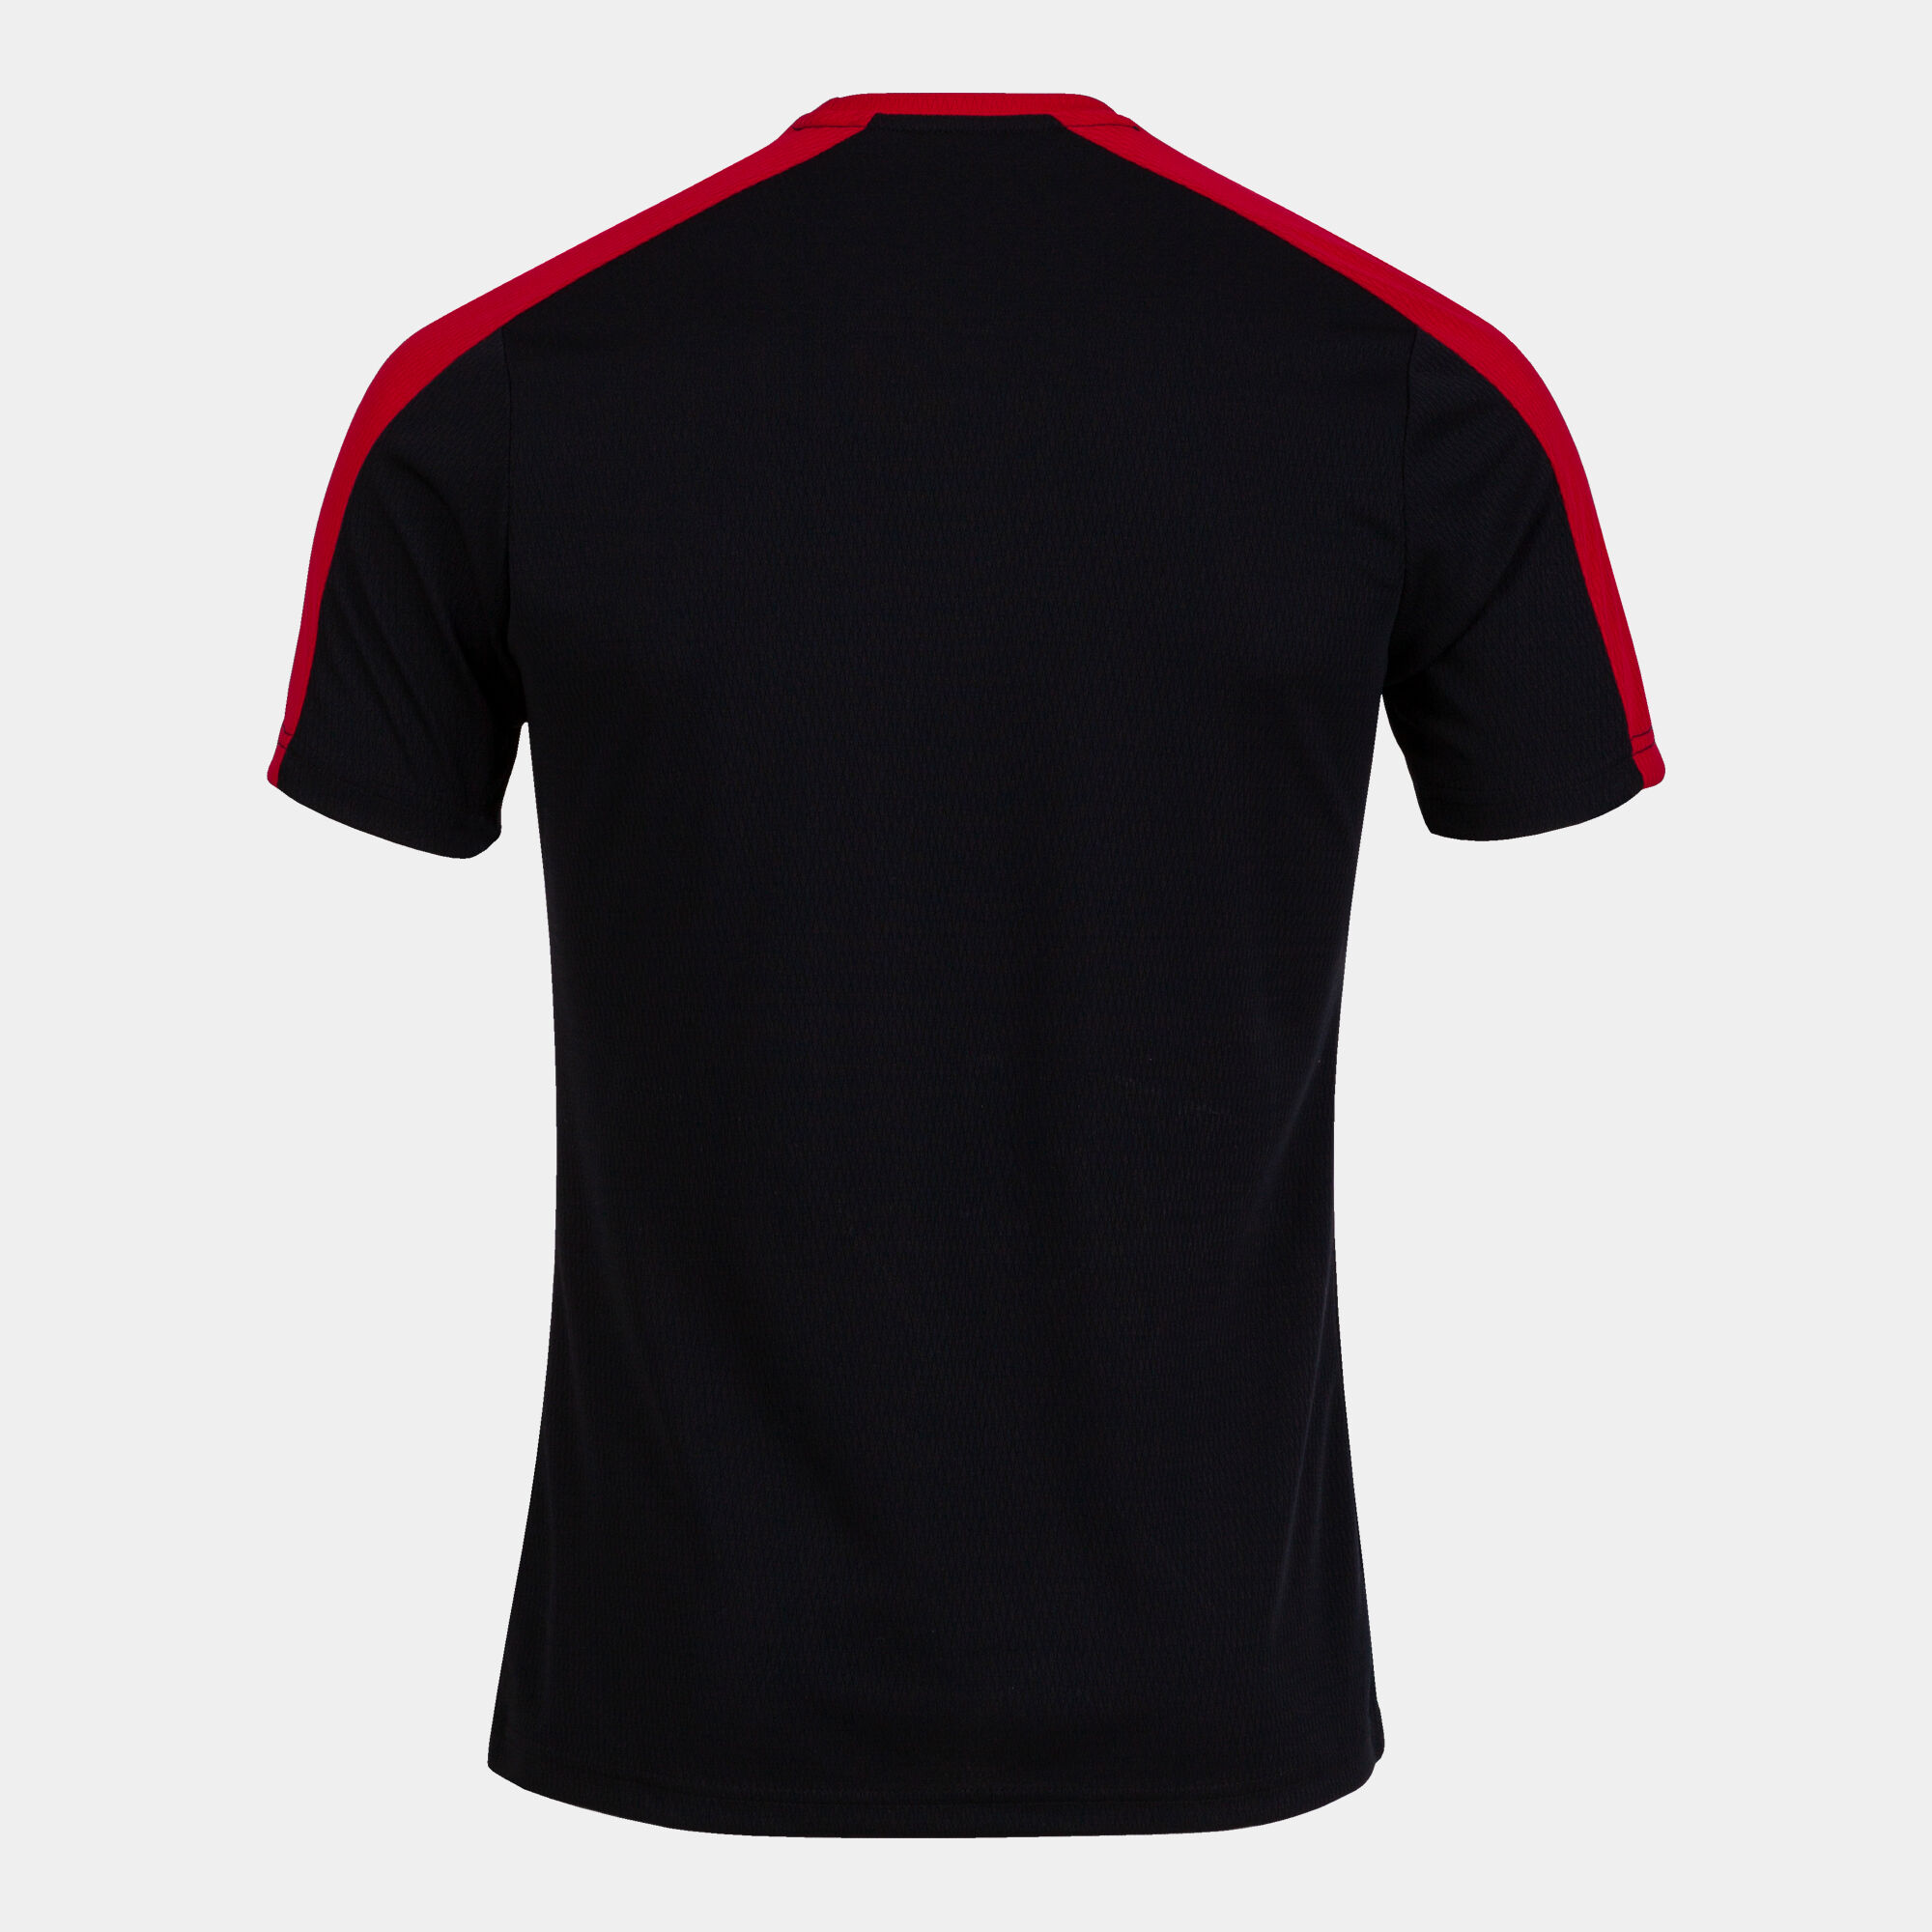 T-shirt manga curta homem Eco Championship preto vermelho